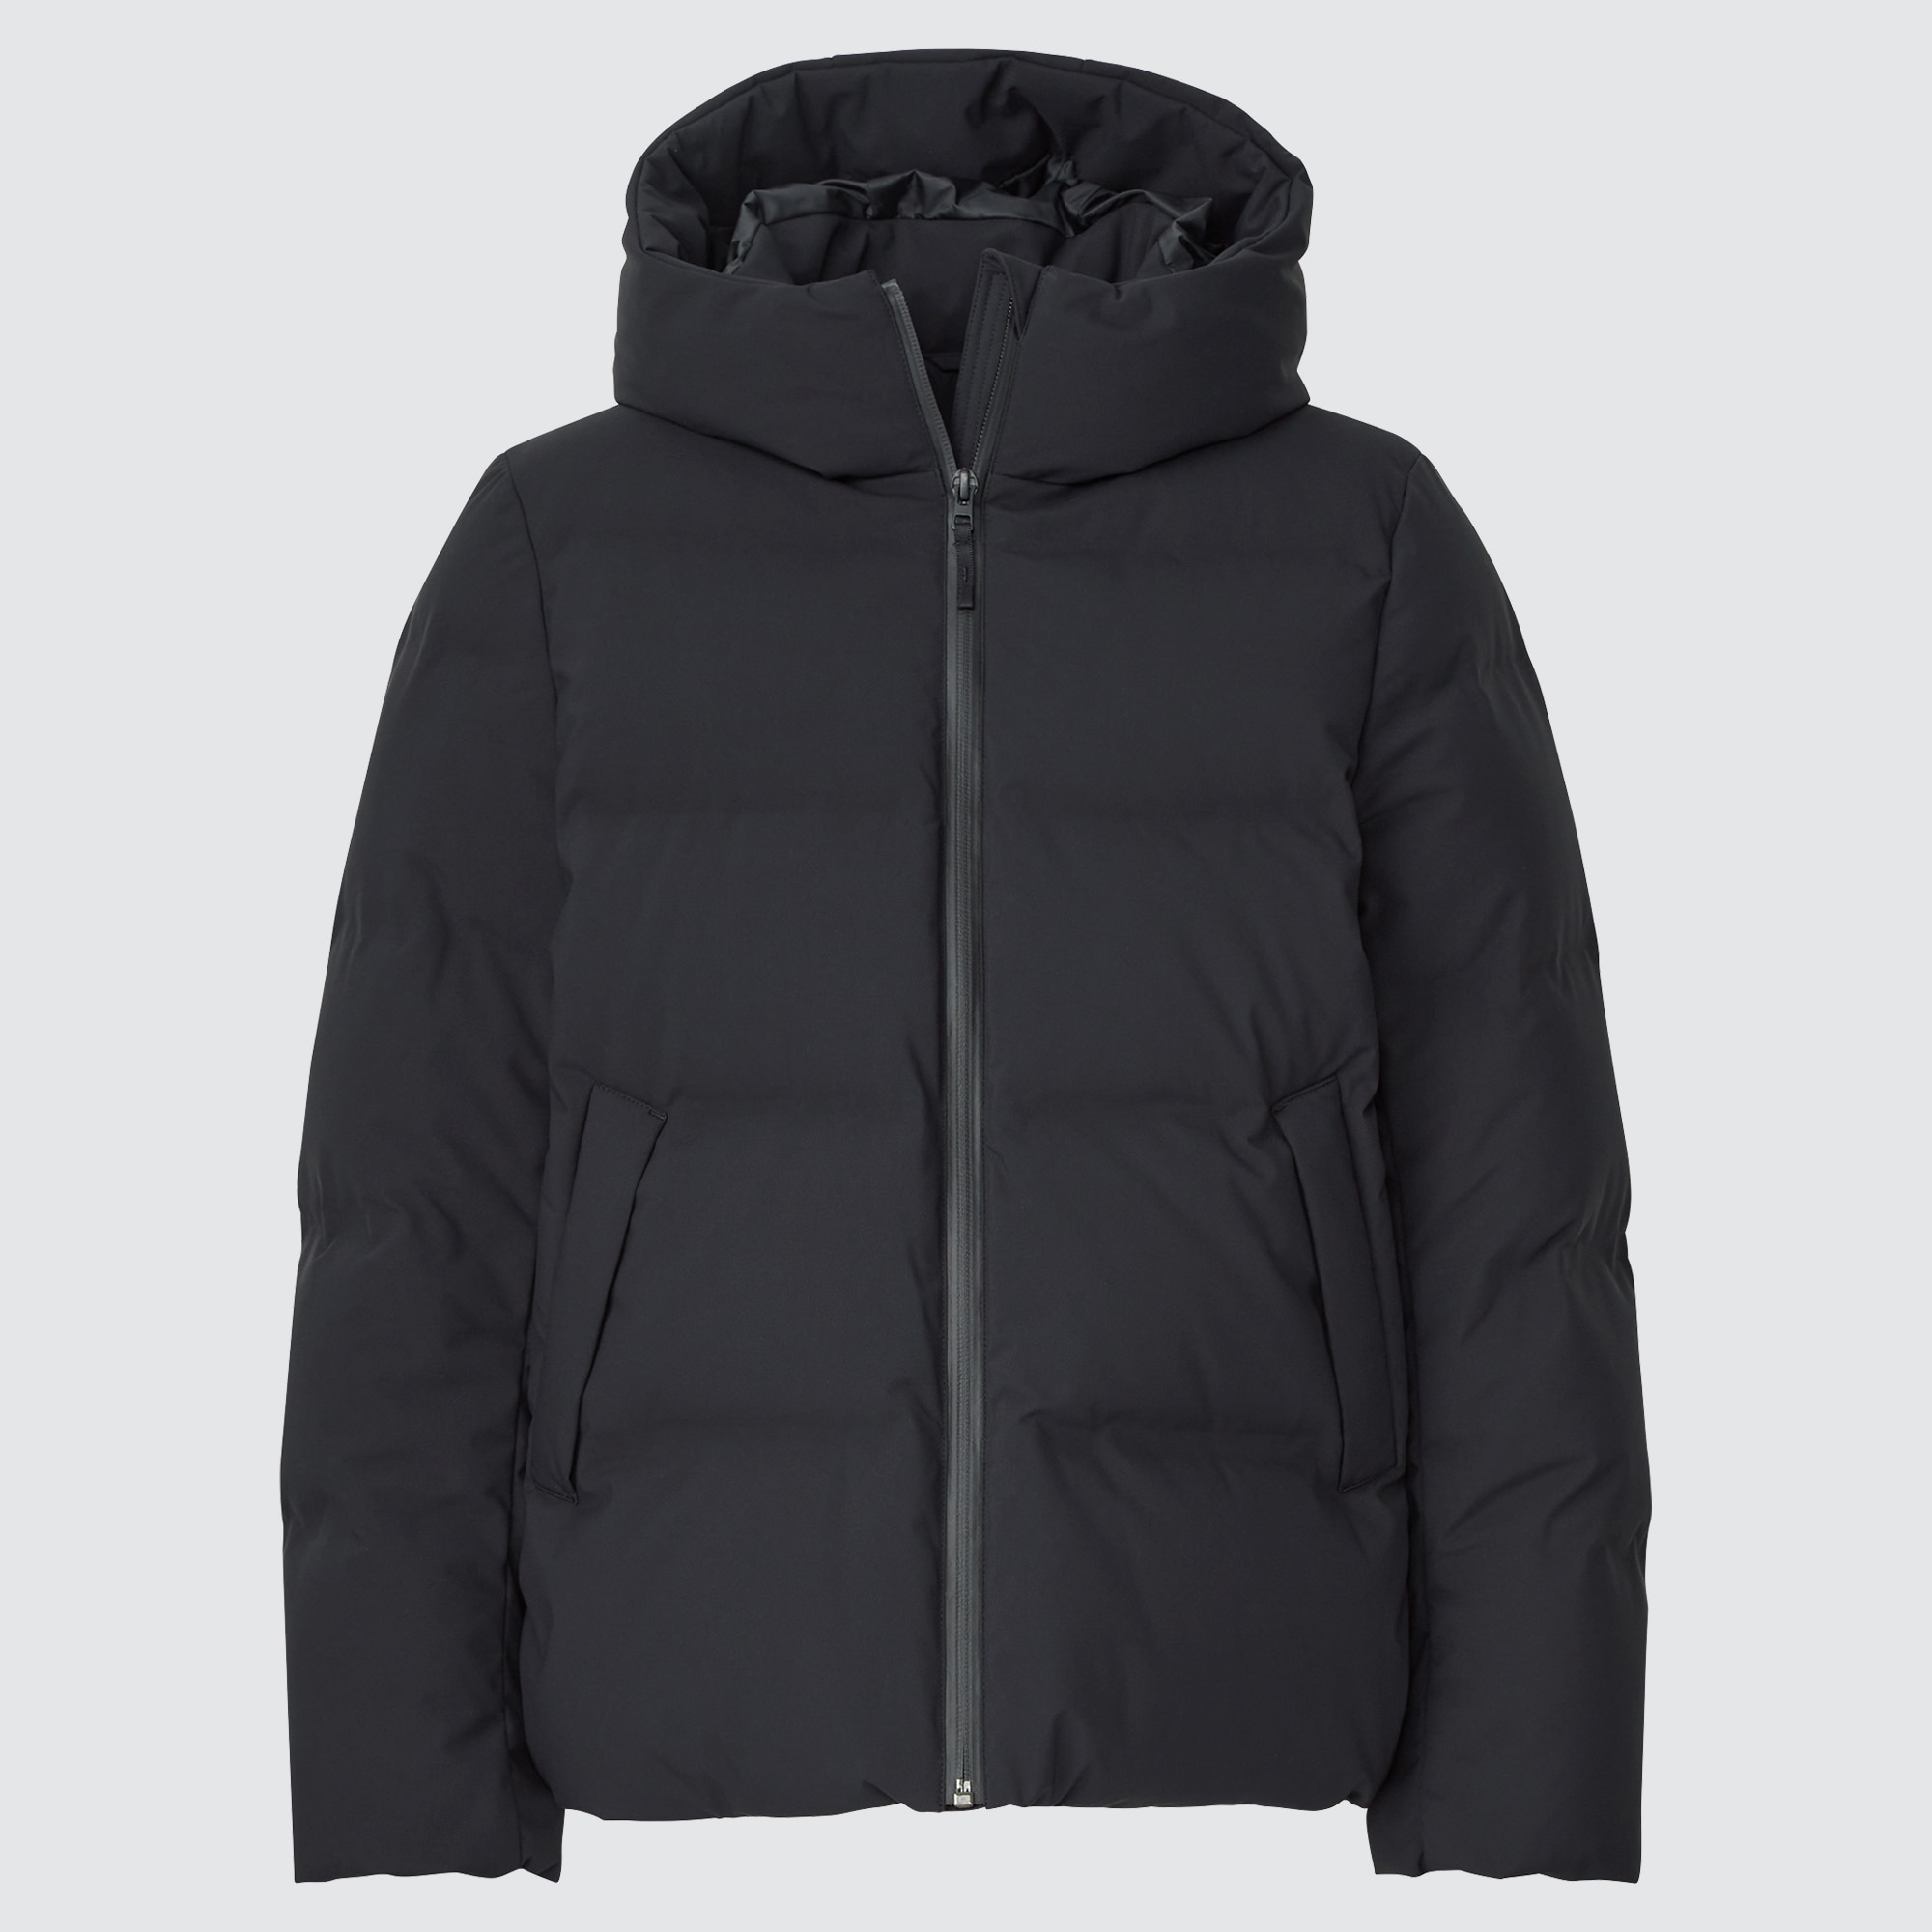 Seamless jersey zip jacket in black